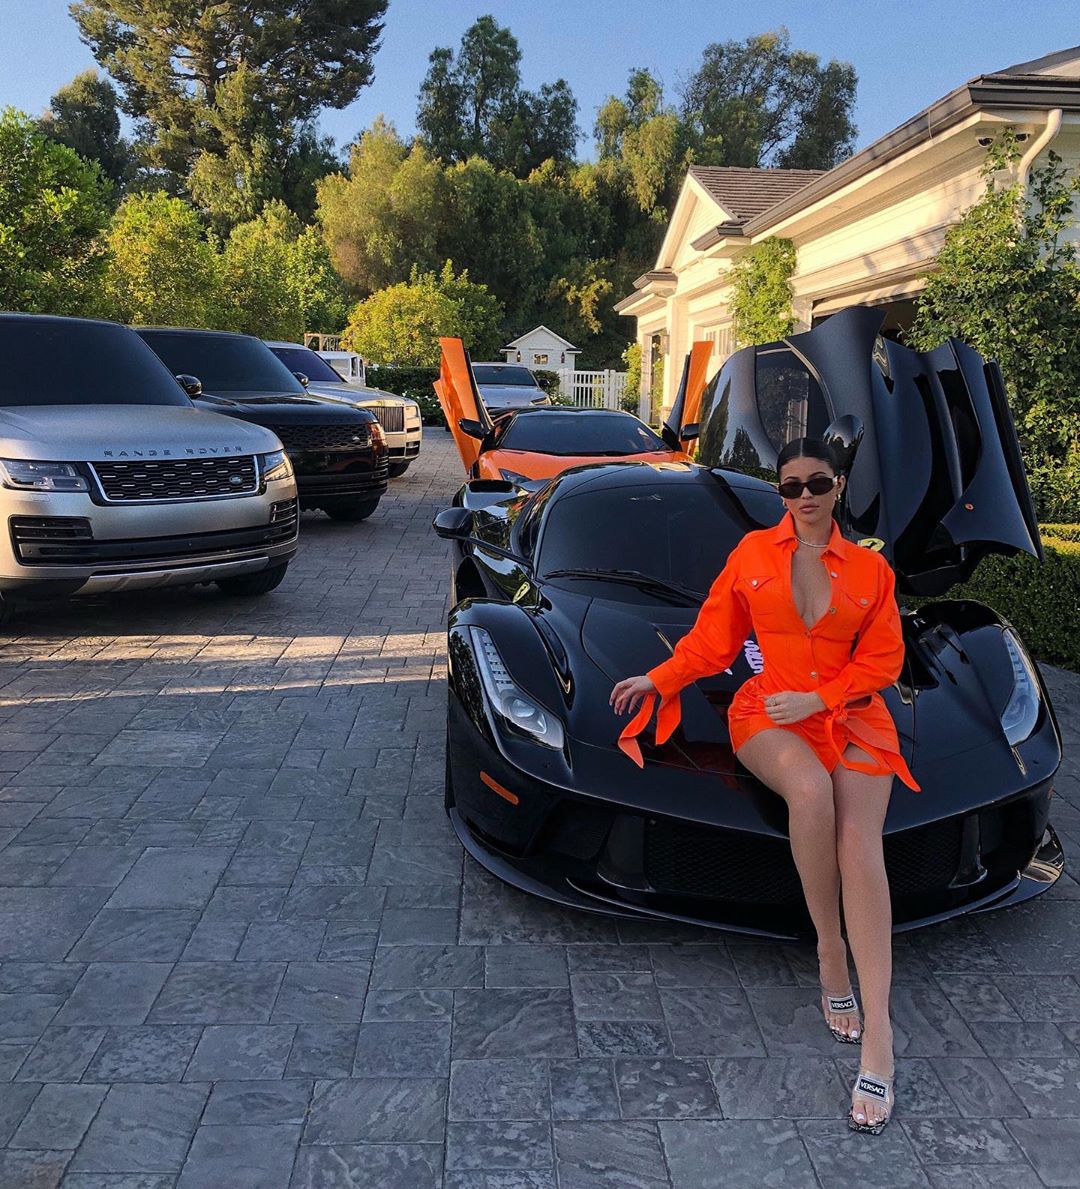 Kylie Jenner Got Some Backlash After Showing Off Her Many Luxury Cars on Instagram